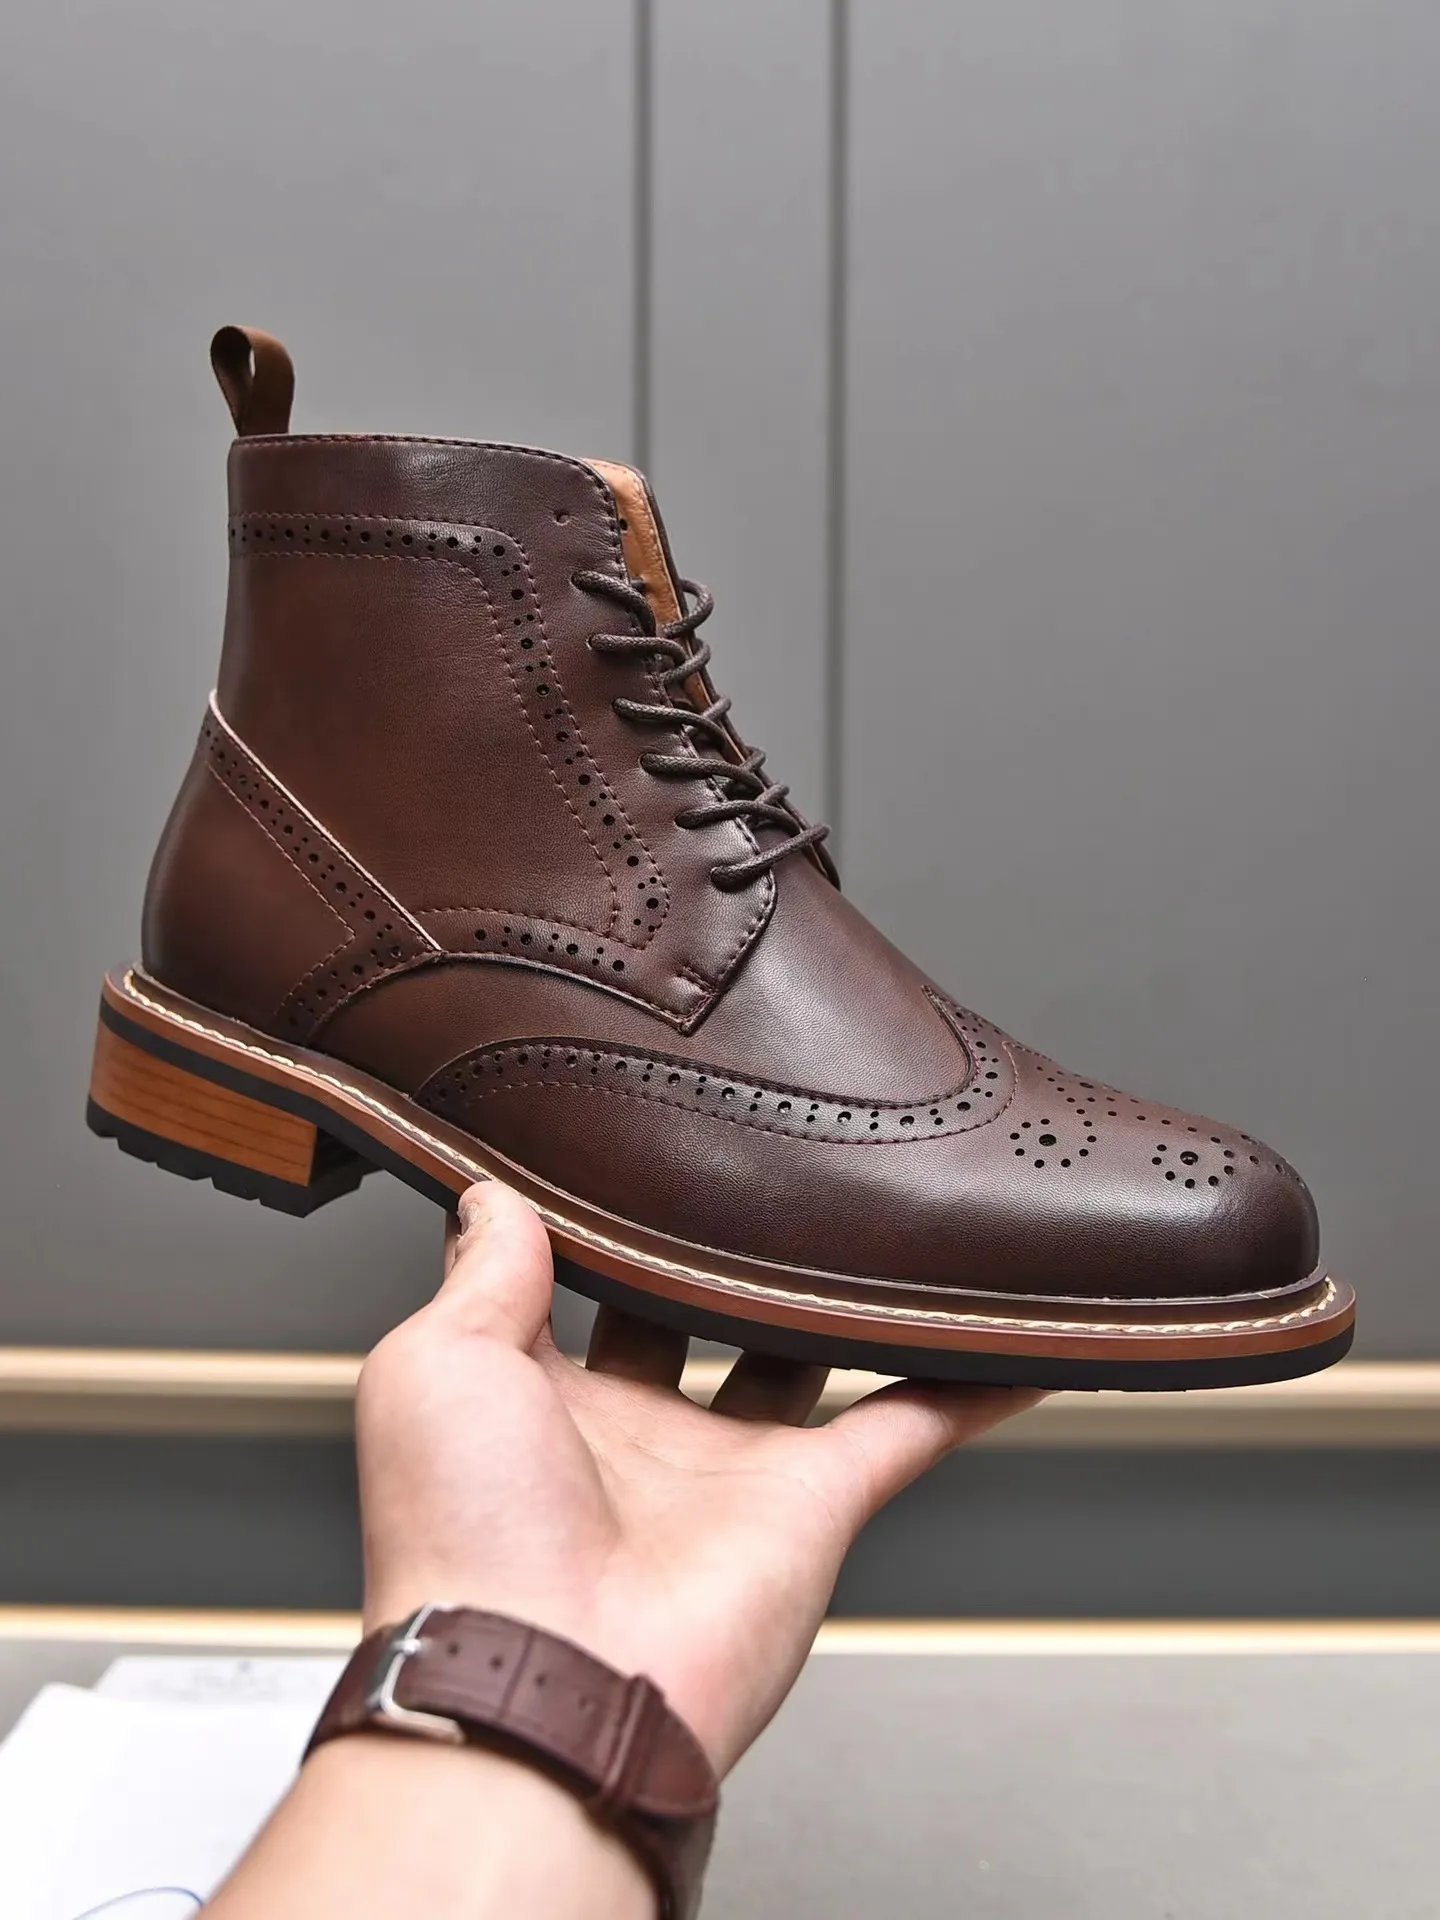 Block Men's Boots Casual Business ChelseaBoots Designer Luxury Sculpté LeatherBoots British Leather Shoes